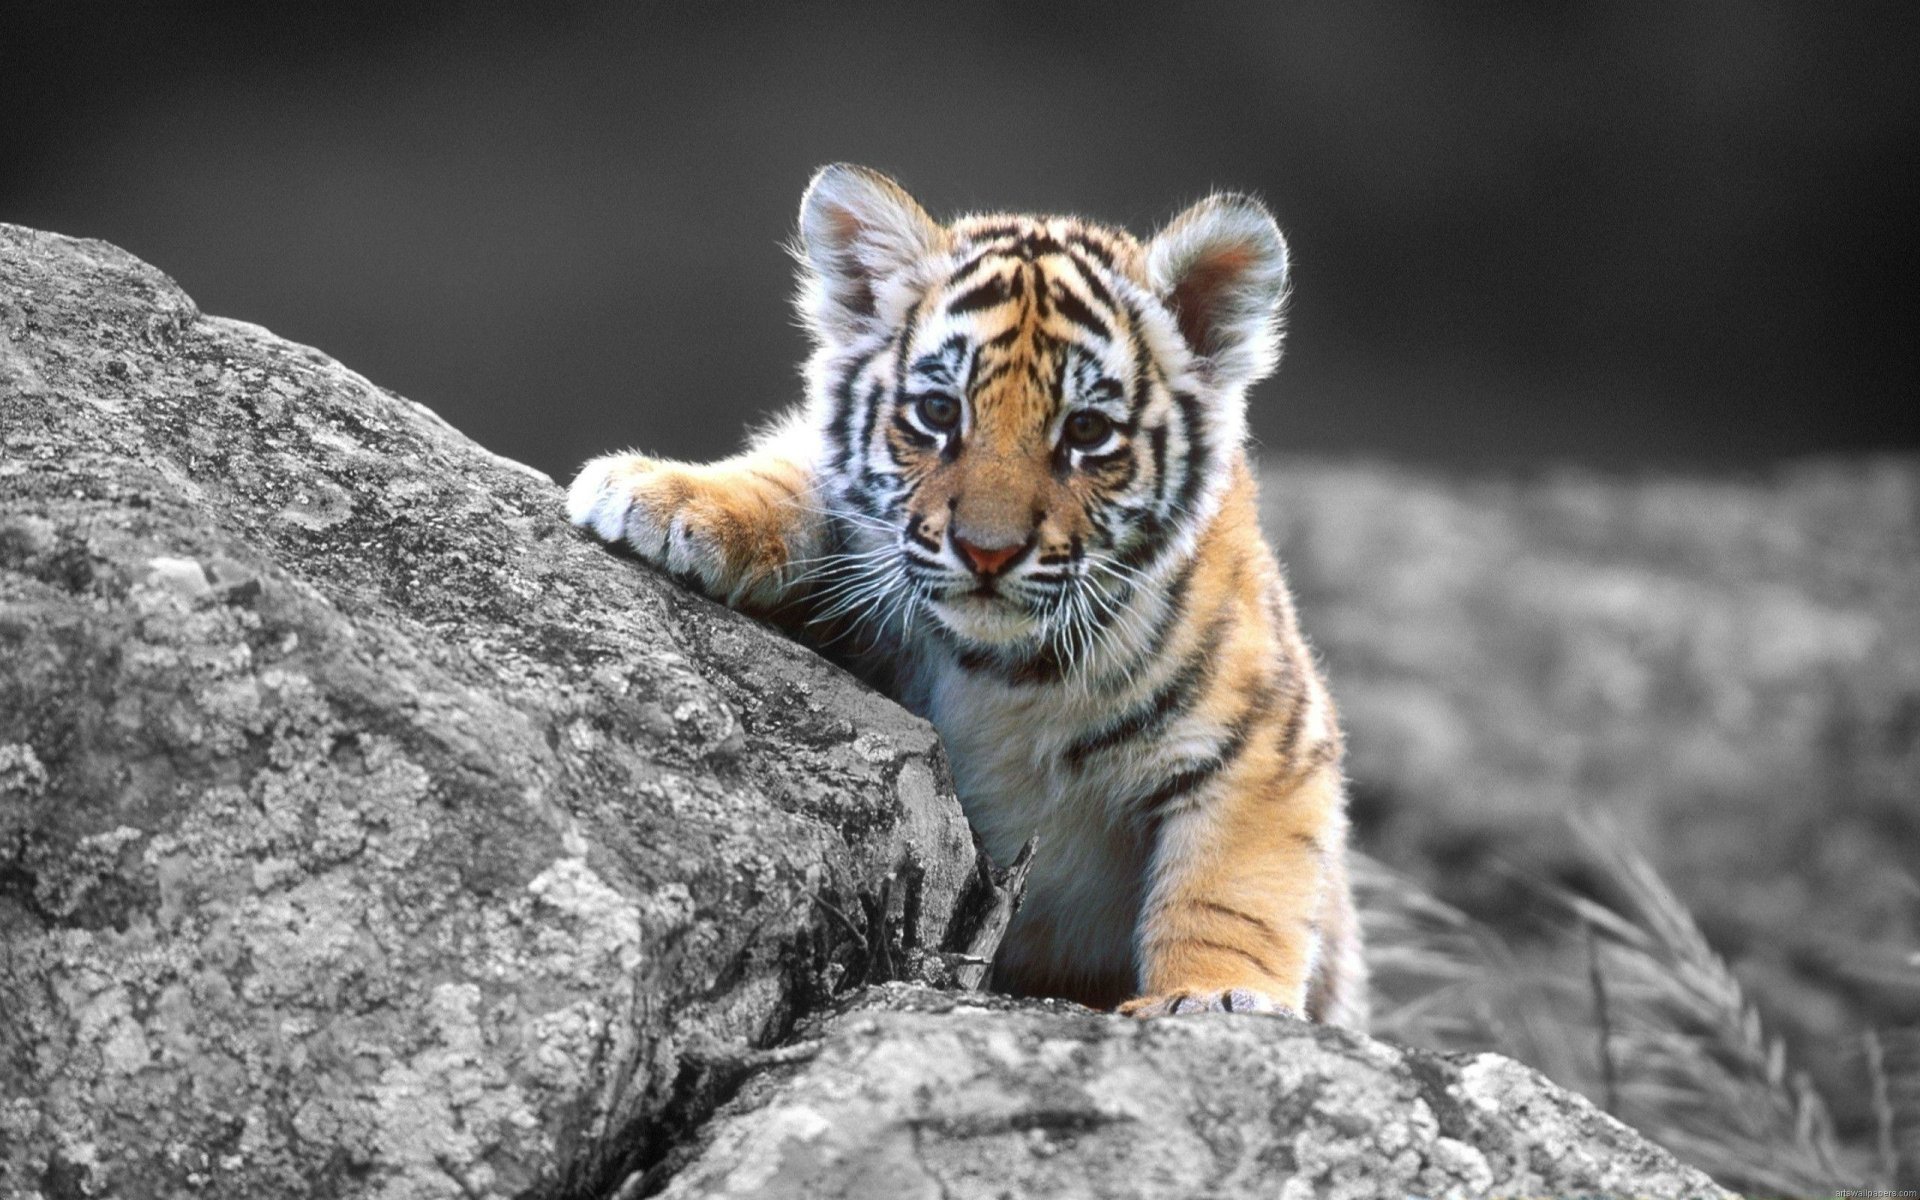 tiger Image